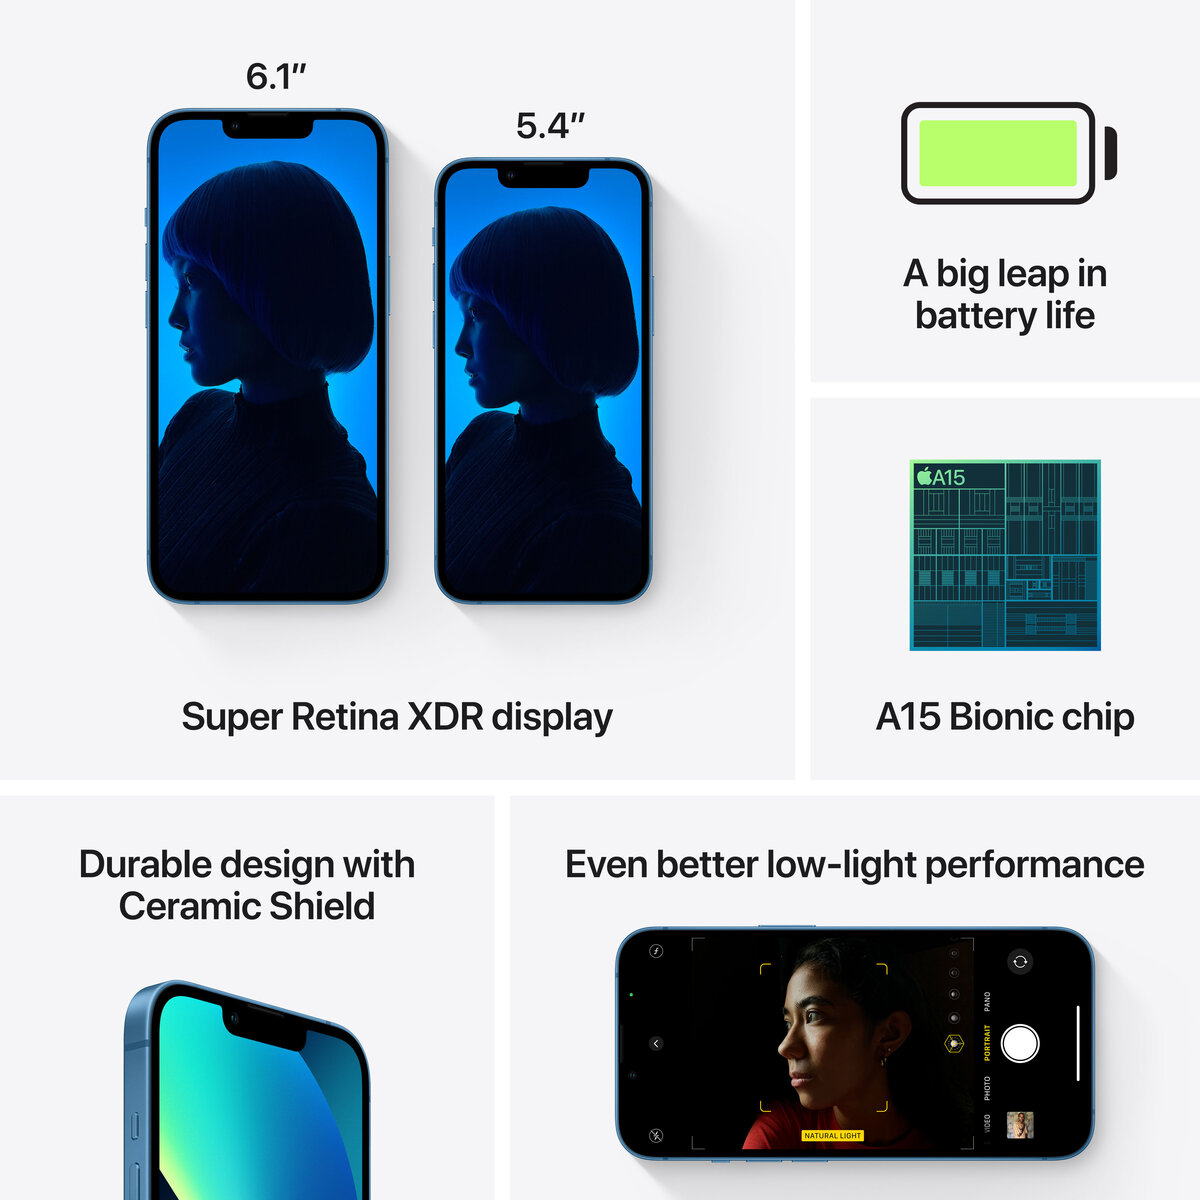 Buy Apple iPhone 13 mini 128GB Sim Free Mobile Phone in Blue, MLK43B/A at costco.co.uk